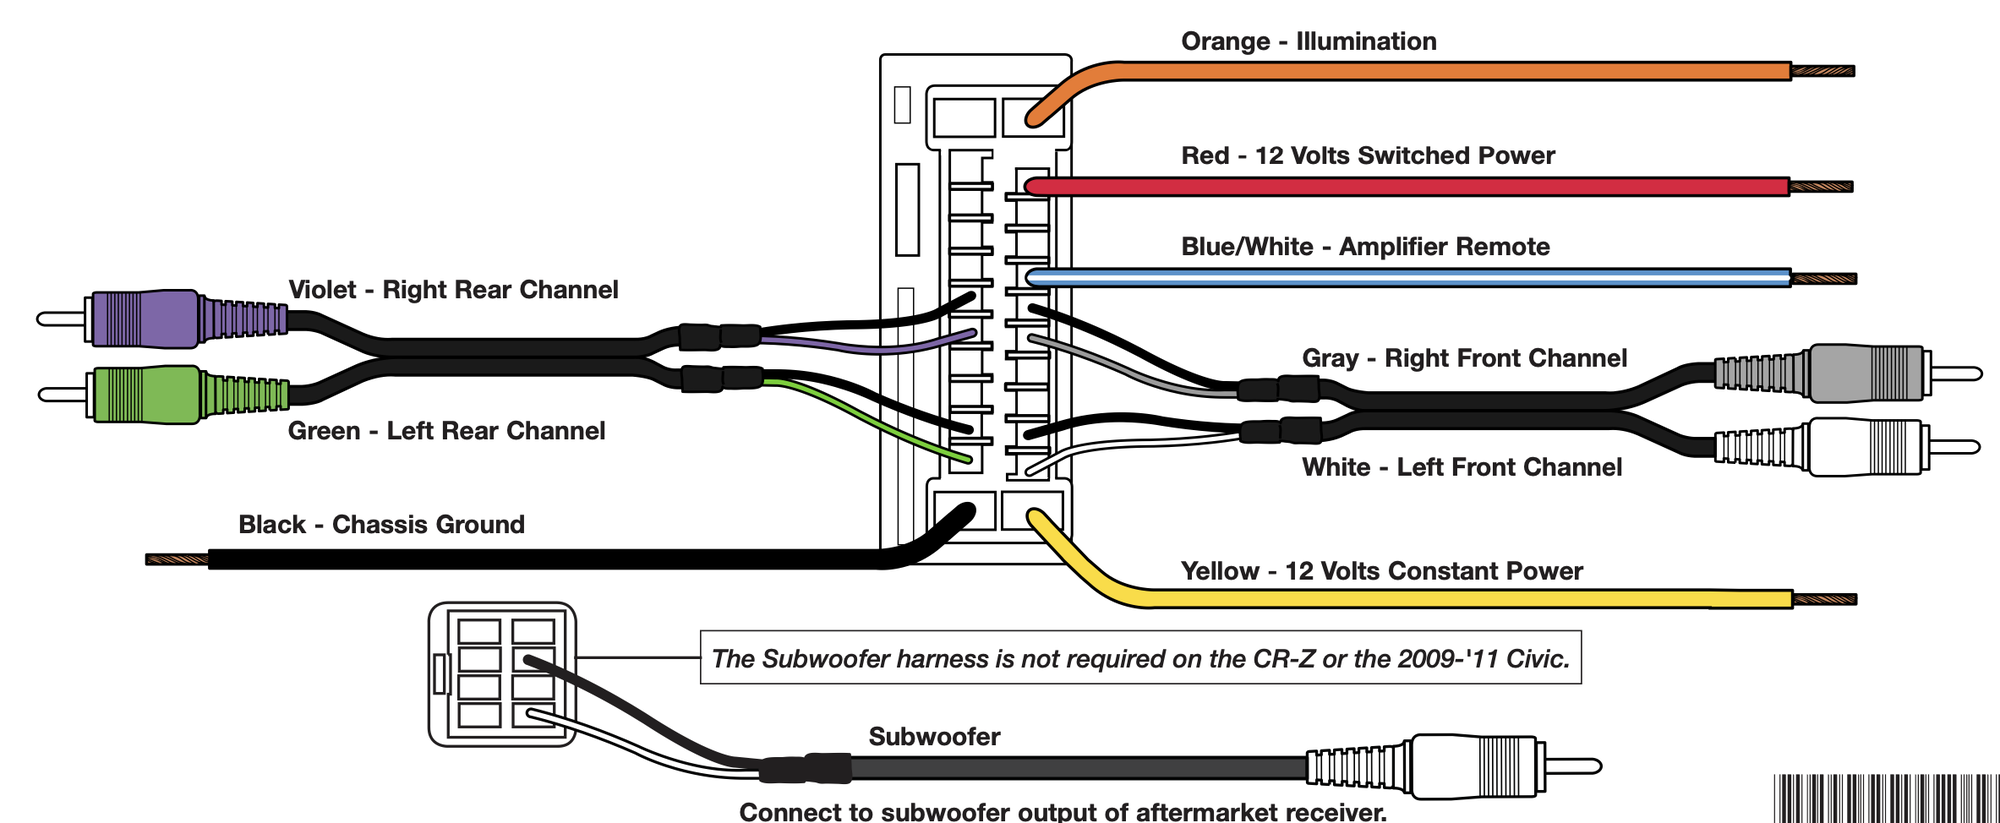 metra wiring harness diagram - Wiring Diagram